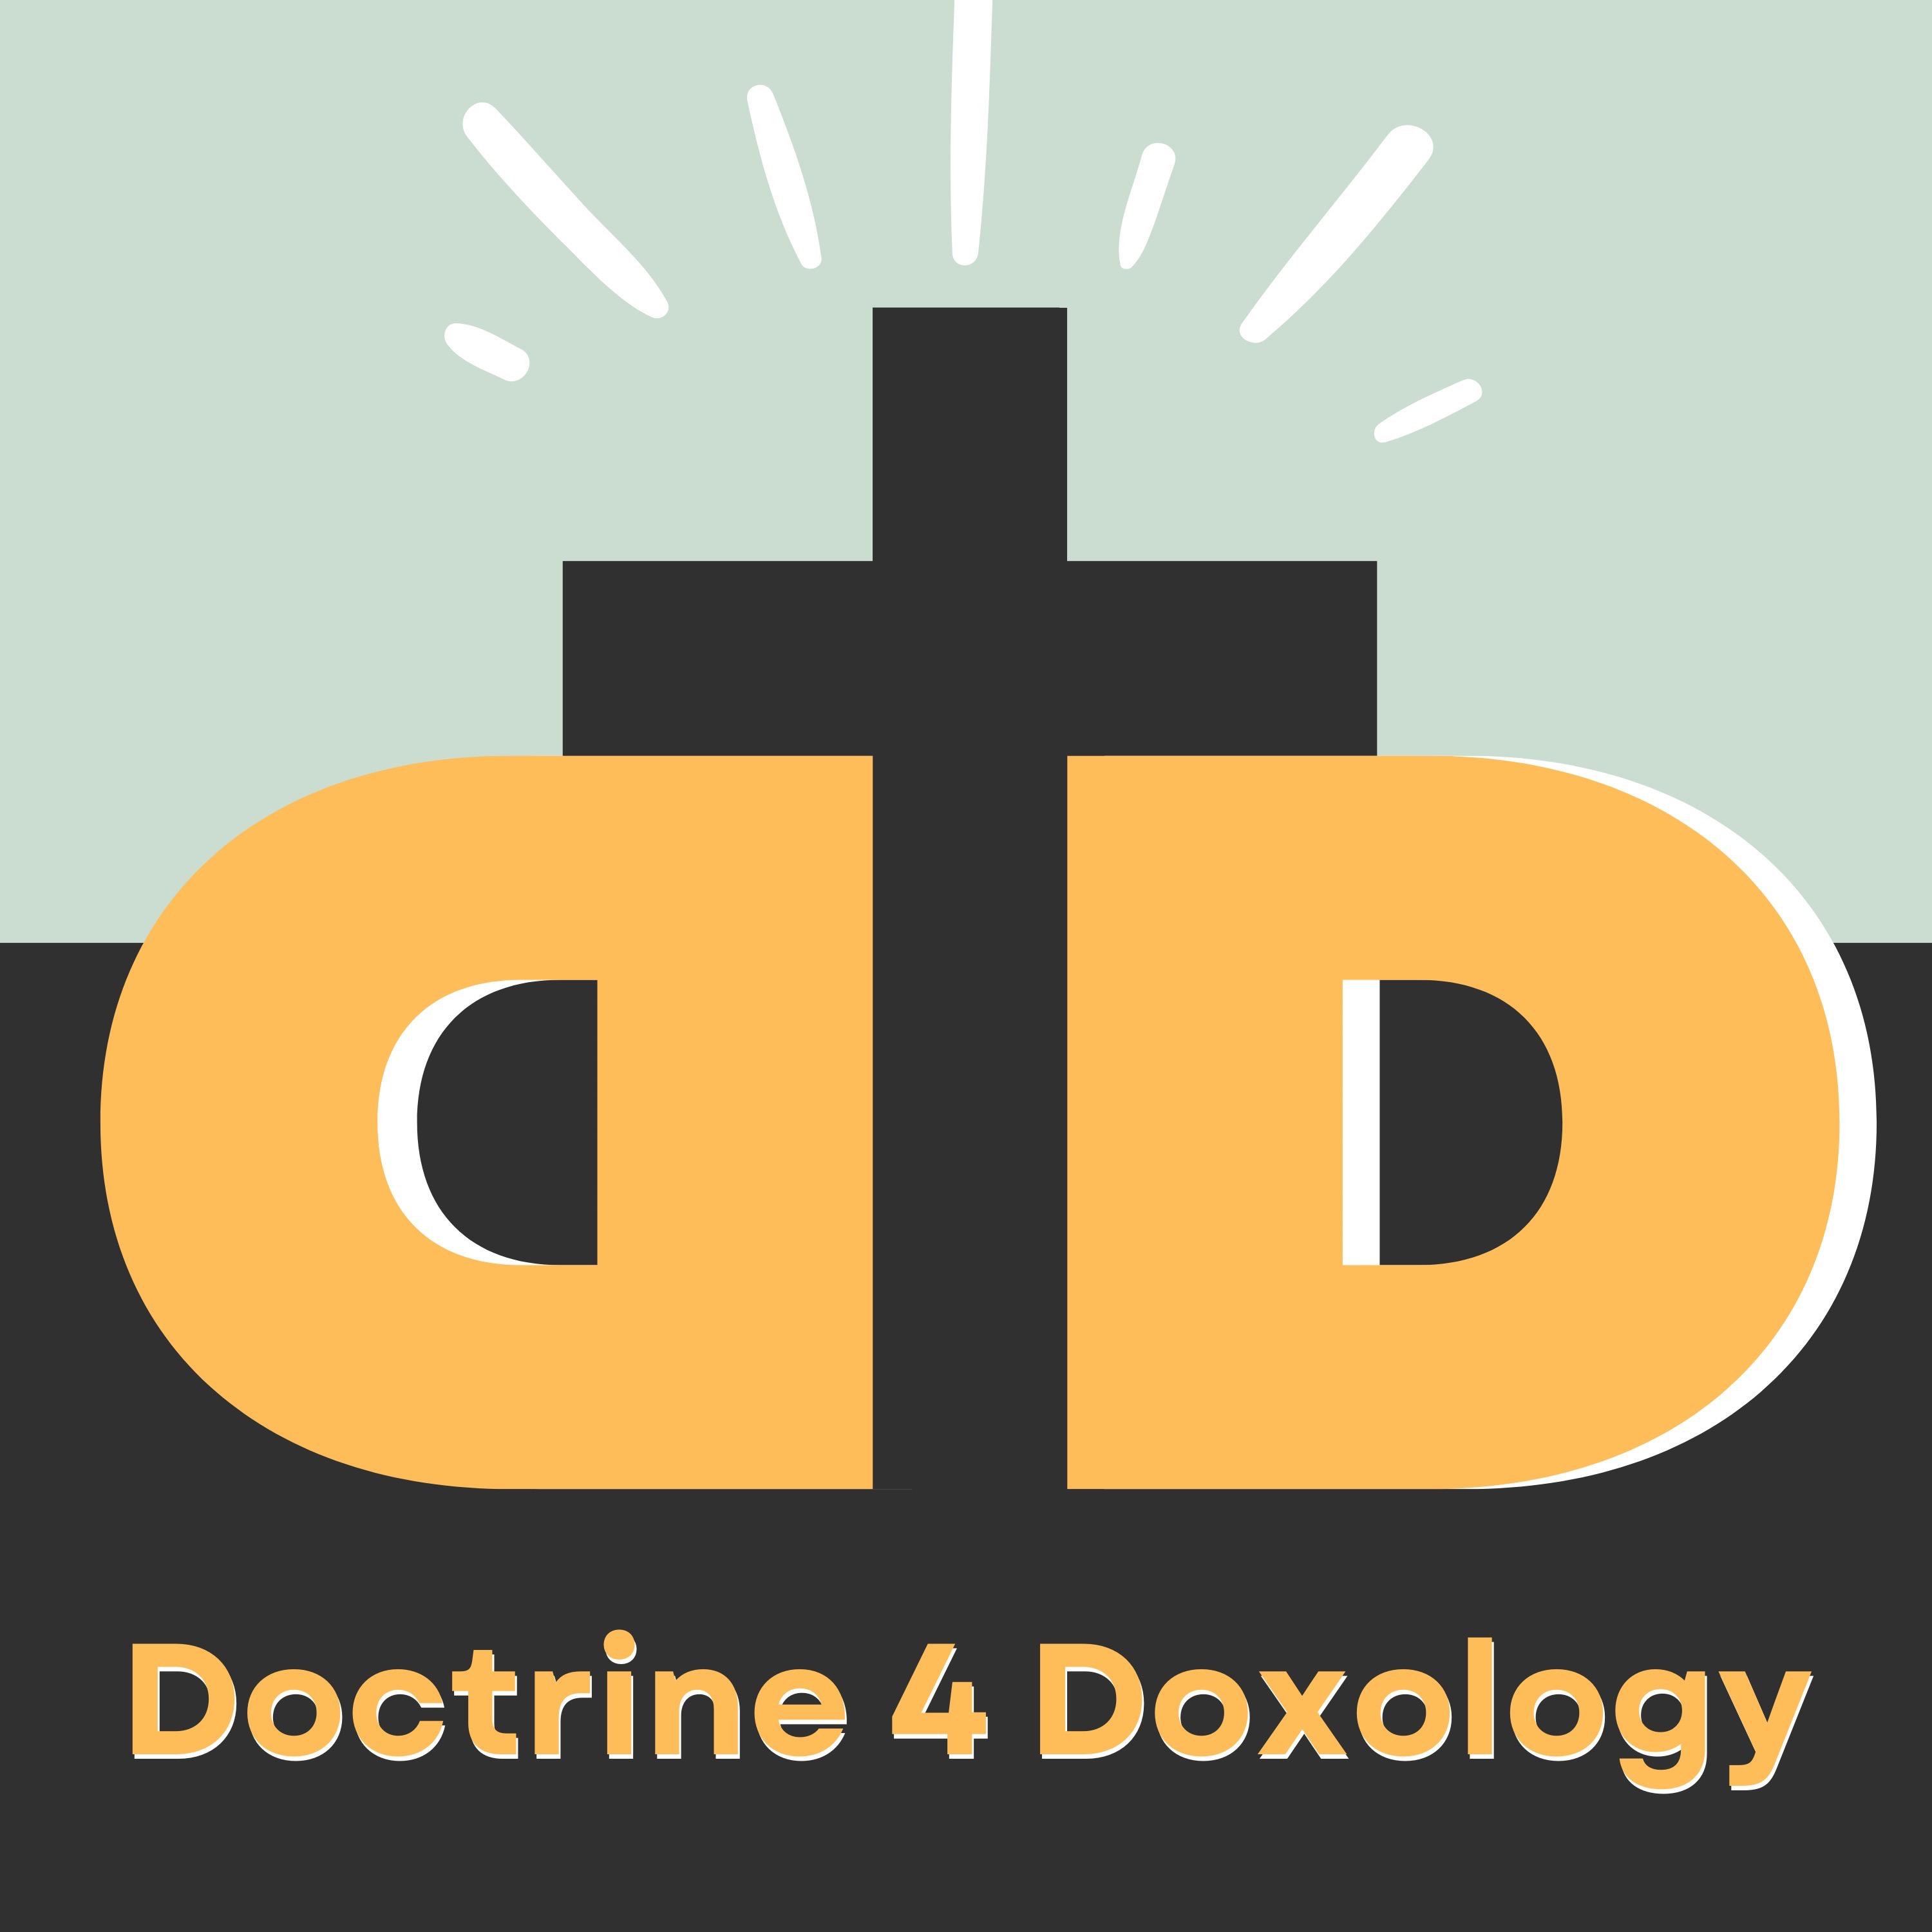 Doctrine 4 Doxology (formerly "Bear Christianity")